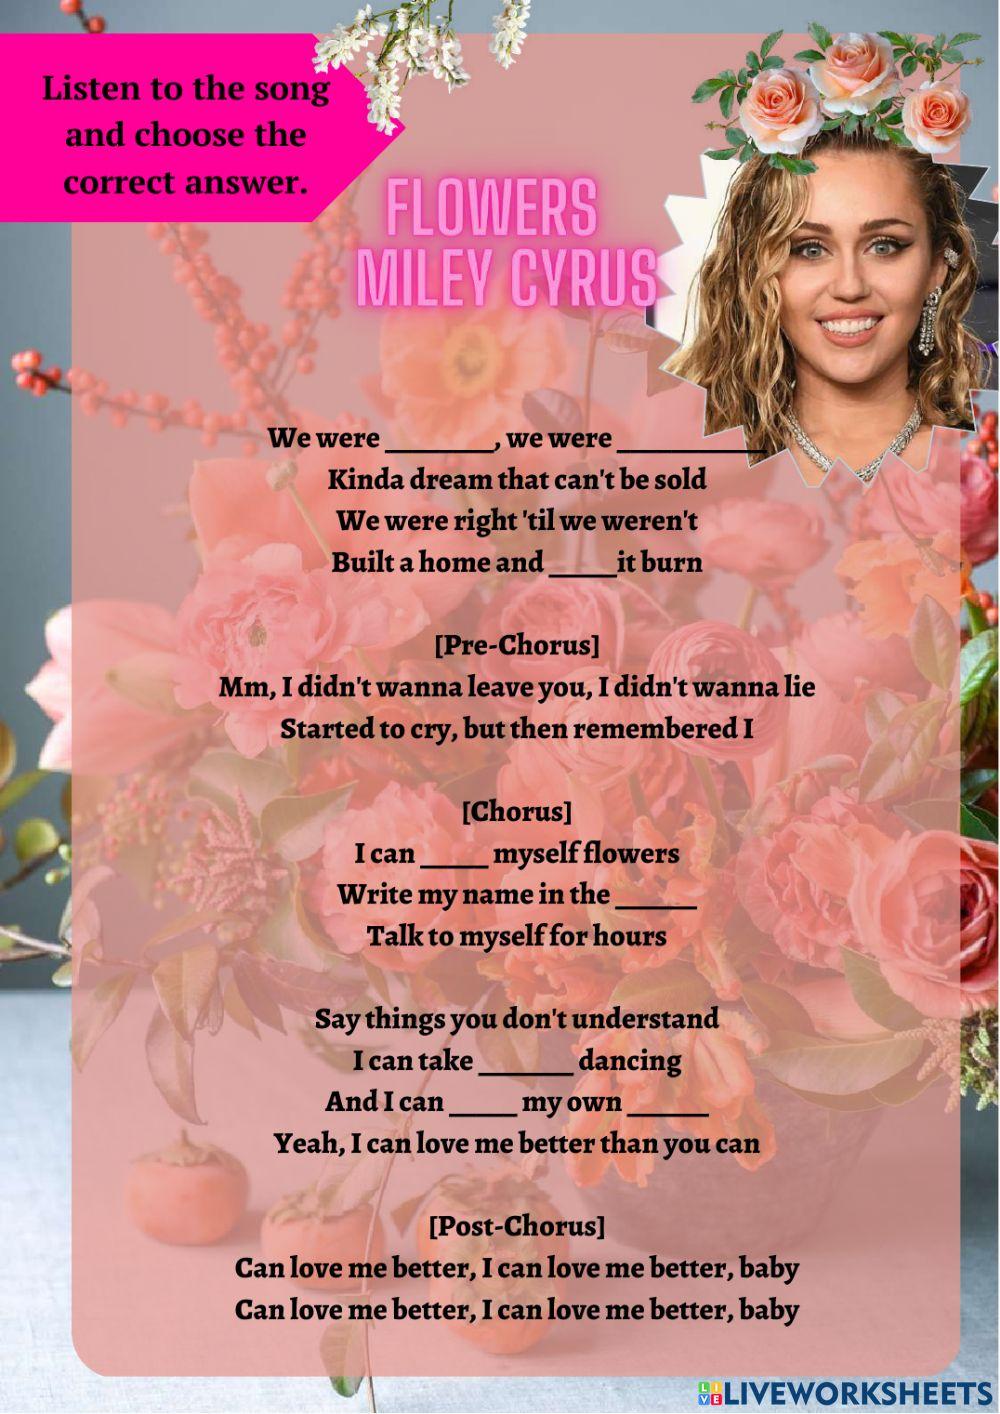 Miley Cyrus Flowers. Майли Сайрус Фловерс текст.